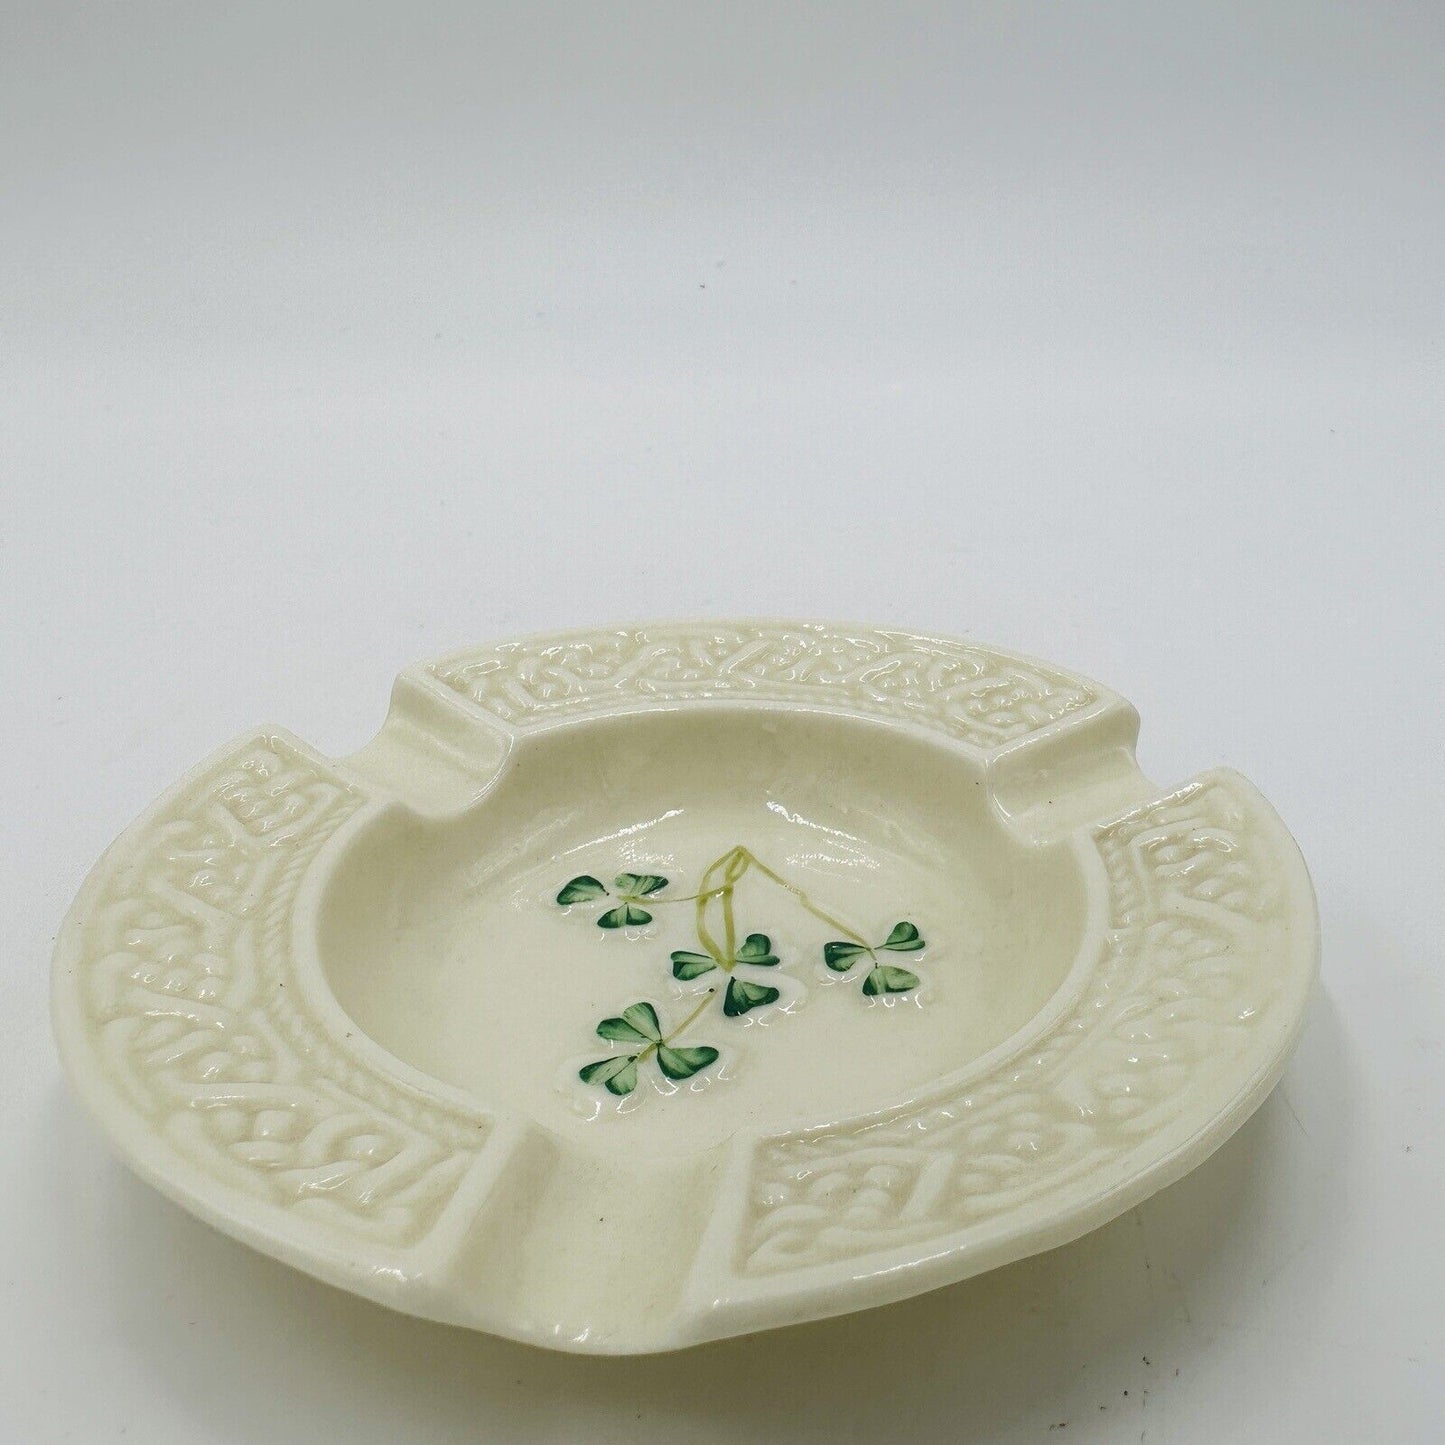 Vintage Belleek Porcelain Ashtray Shamrocks 6th mark 1965 -1980 Ireland Small